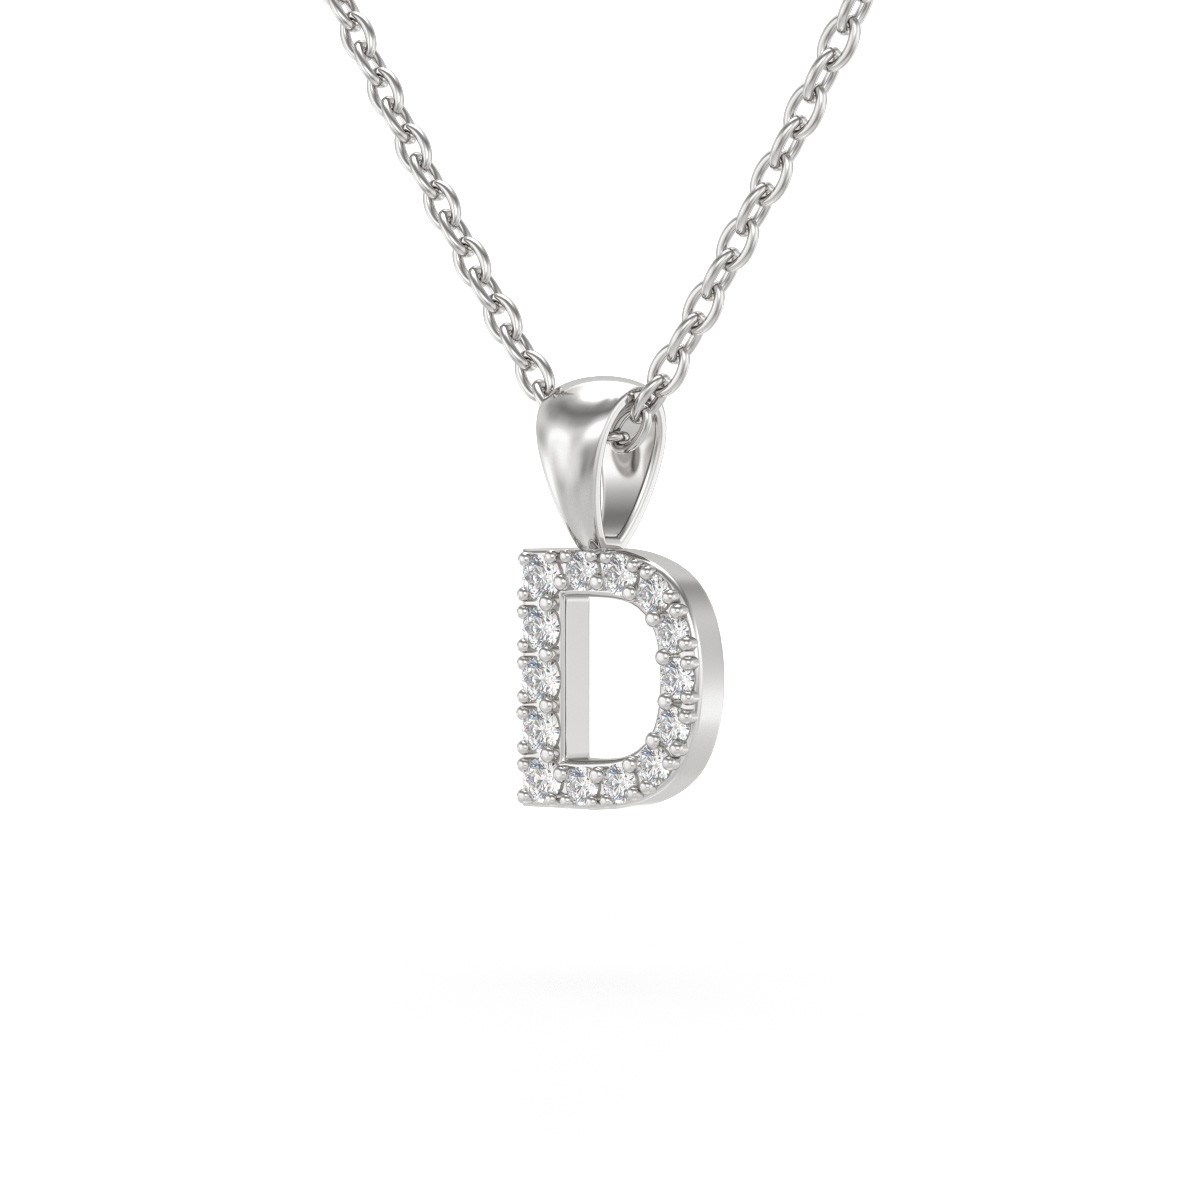 Collier Pendentif ADEN Lettre D Or 750 Blanc Diamant Chaine Or 750 incluse 0.72grs - vue 3